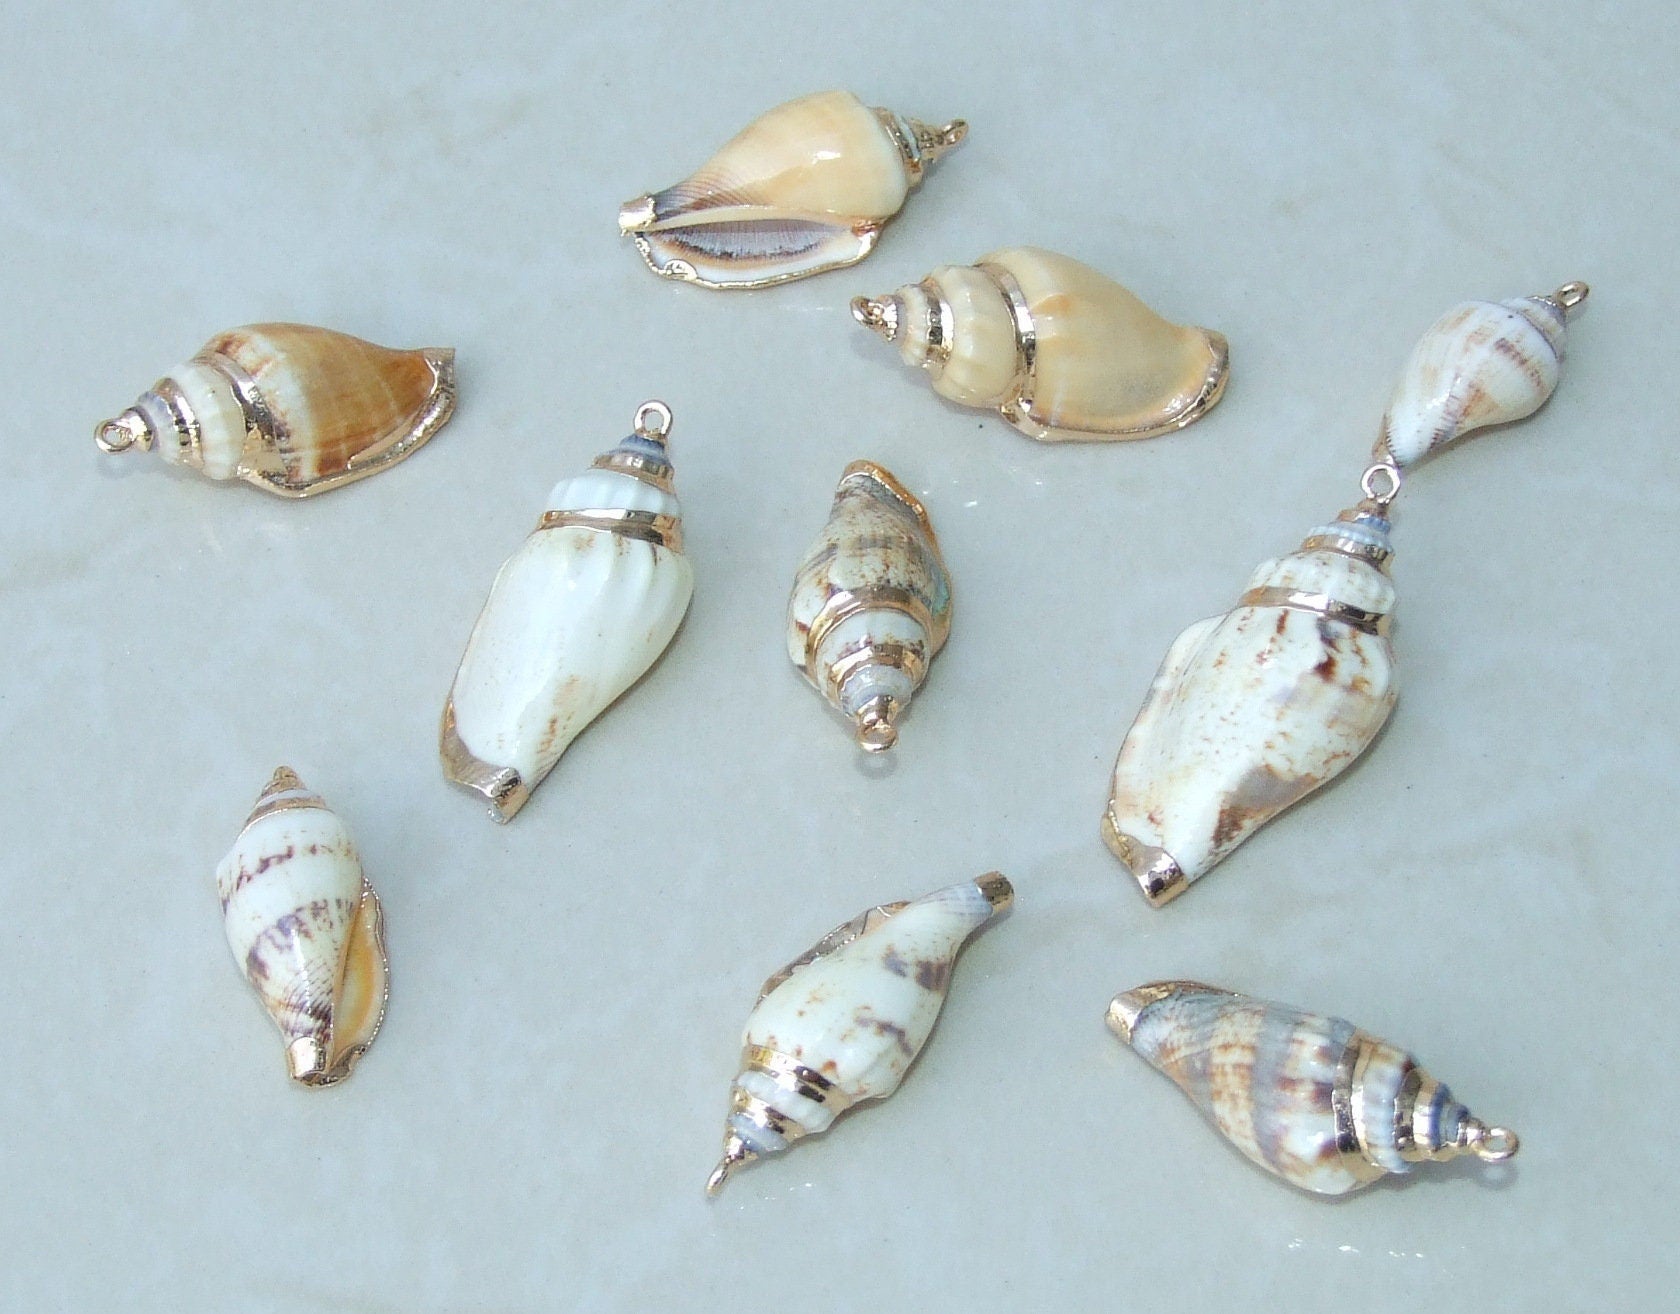 Gold Edge Natural Spiral Sea Shell Pendant, Spiral Shell Bead, Seashell Pendant, Cone Shell, Conch Shell, Beach, Ocean, Summer, Small/Large